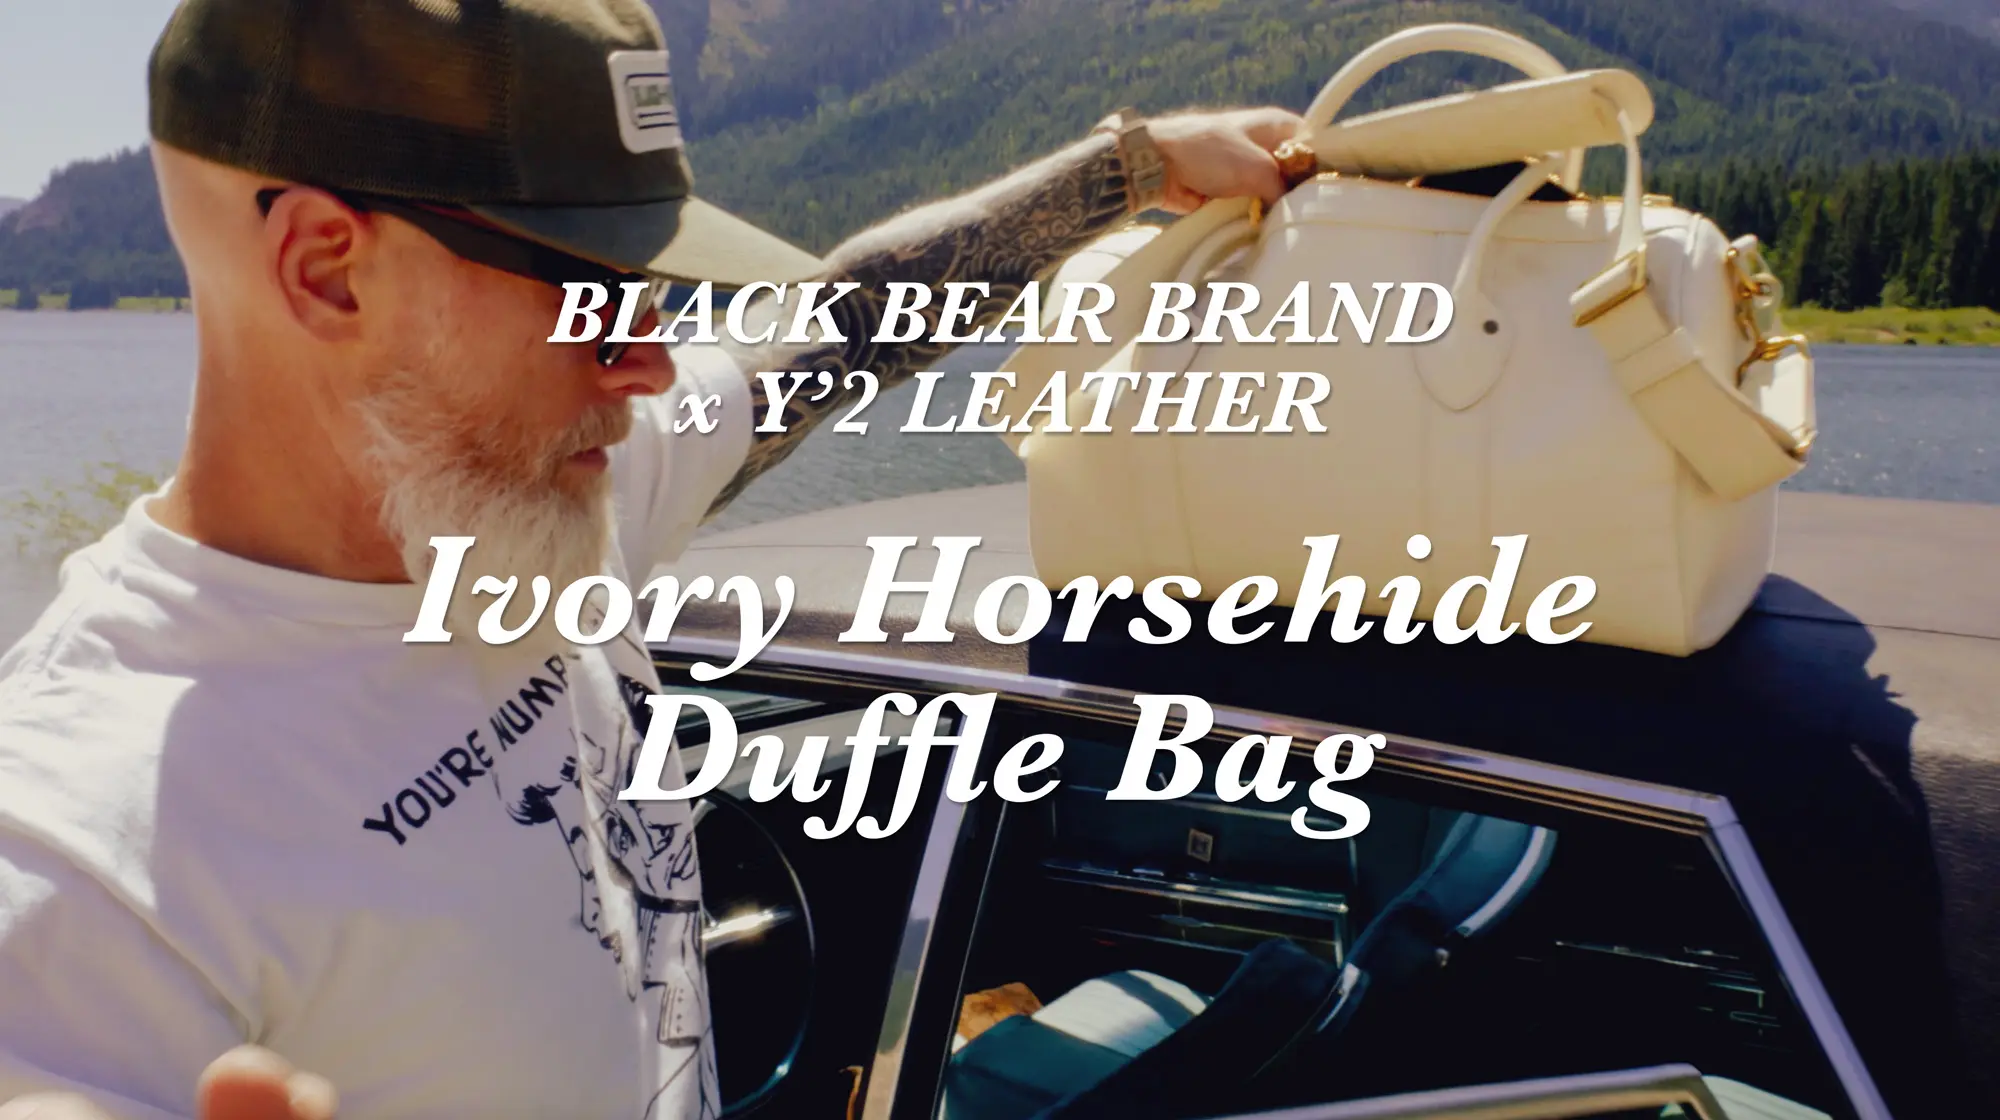 Black Bear Brand x Y'2 LEATHER - Ivory Horsehide Duffle Bag ショートムービー公開 レザージャケット 革ジャン